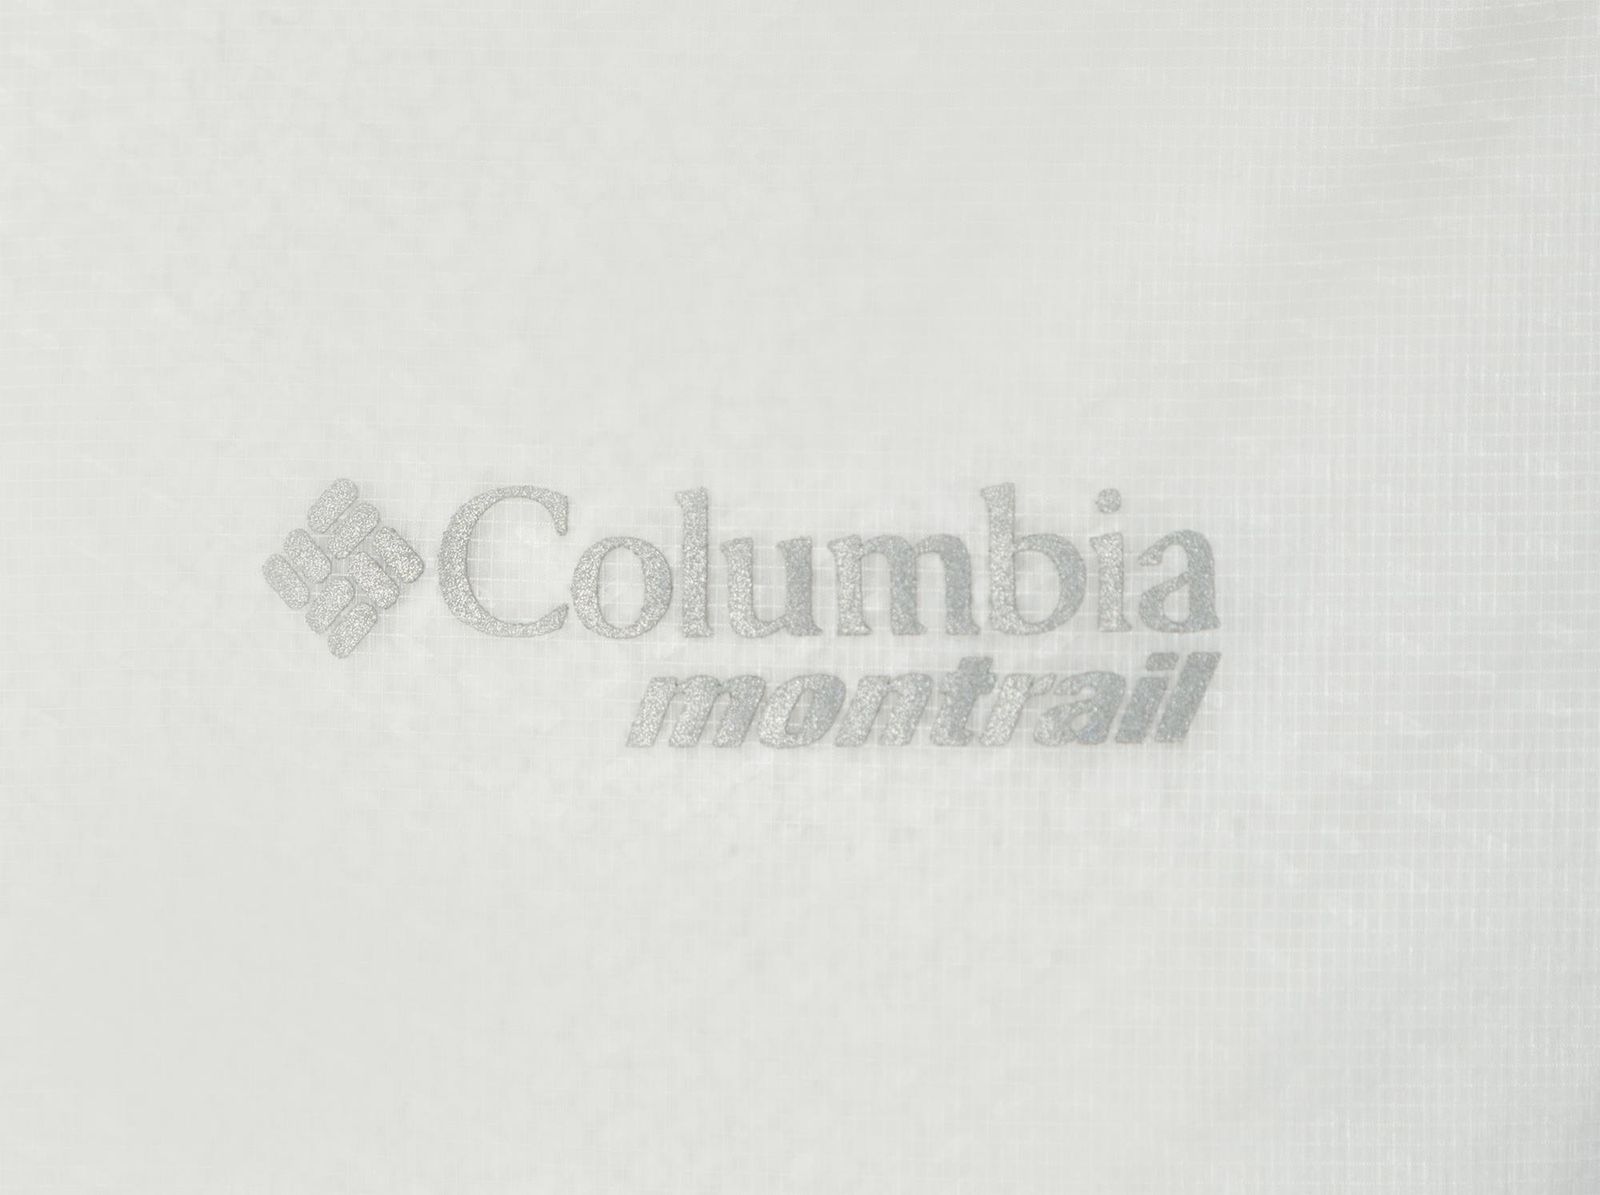   Columbia F, : . 1840921-031.  M (46/48)